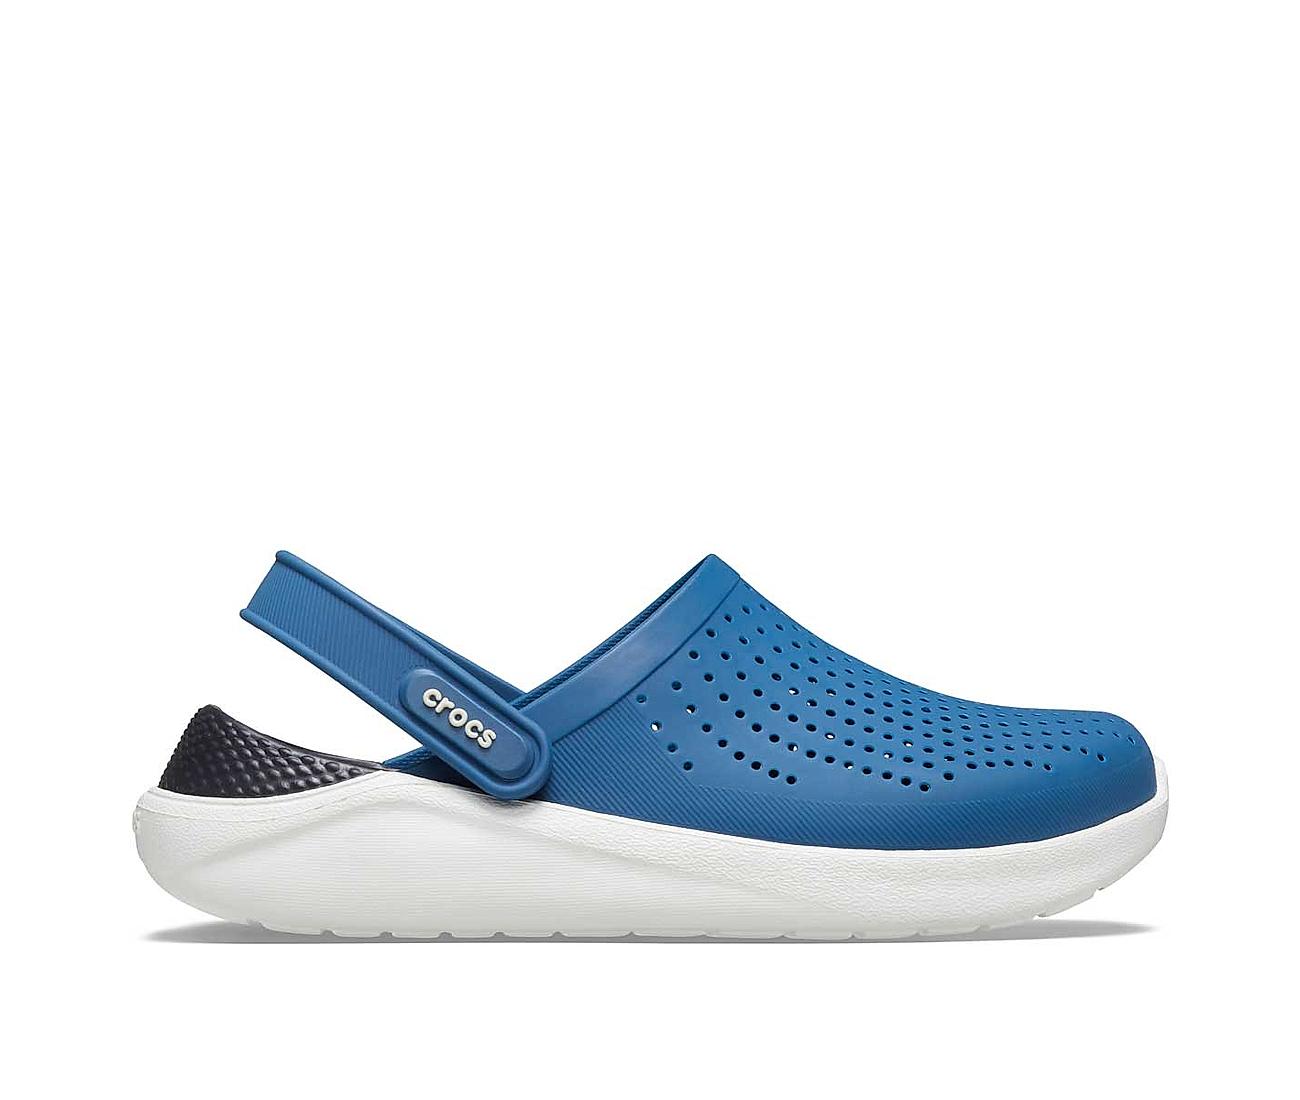 Buy Crocs Men's Blue Literide Clog Online at Regal Shoes |8276154